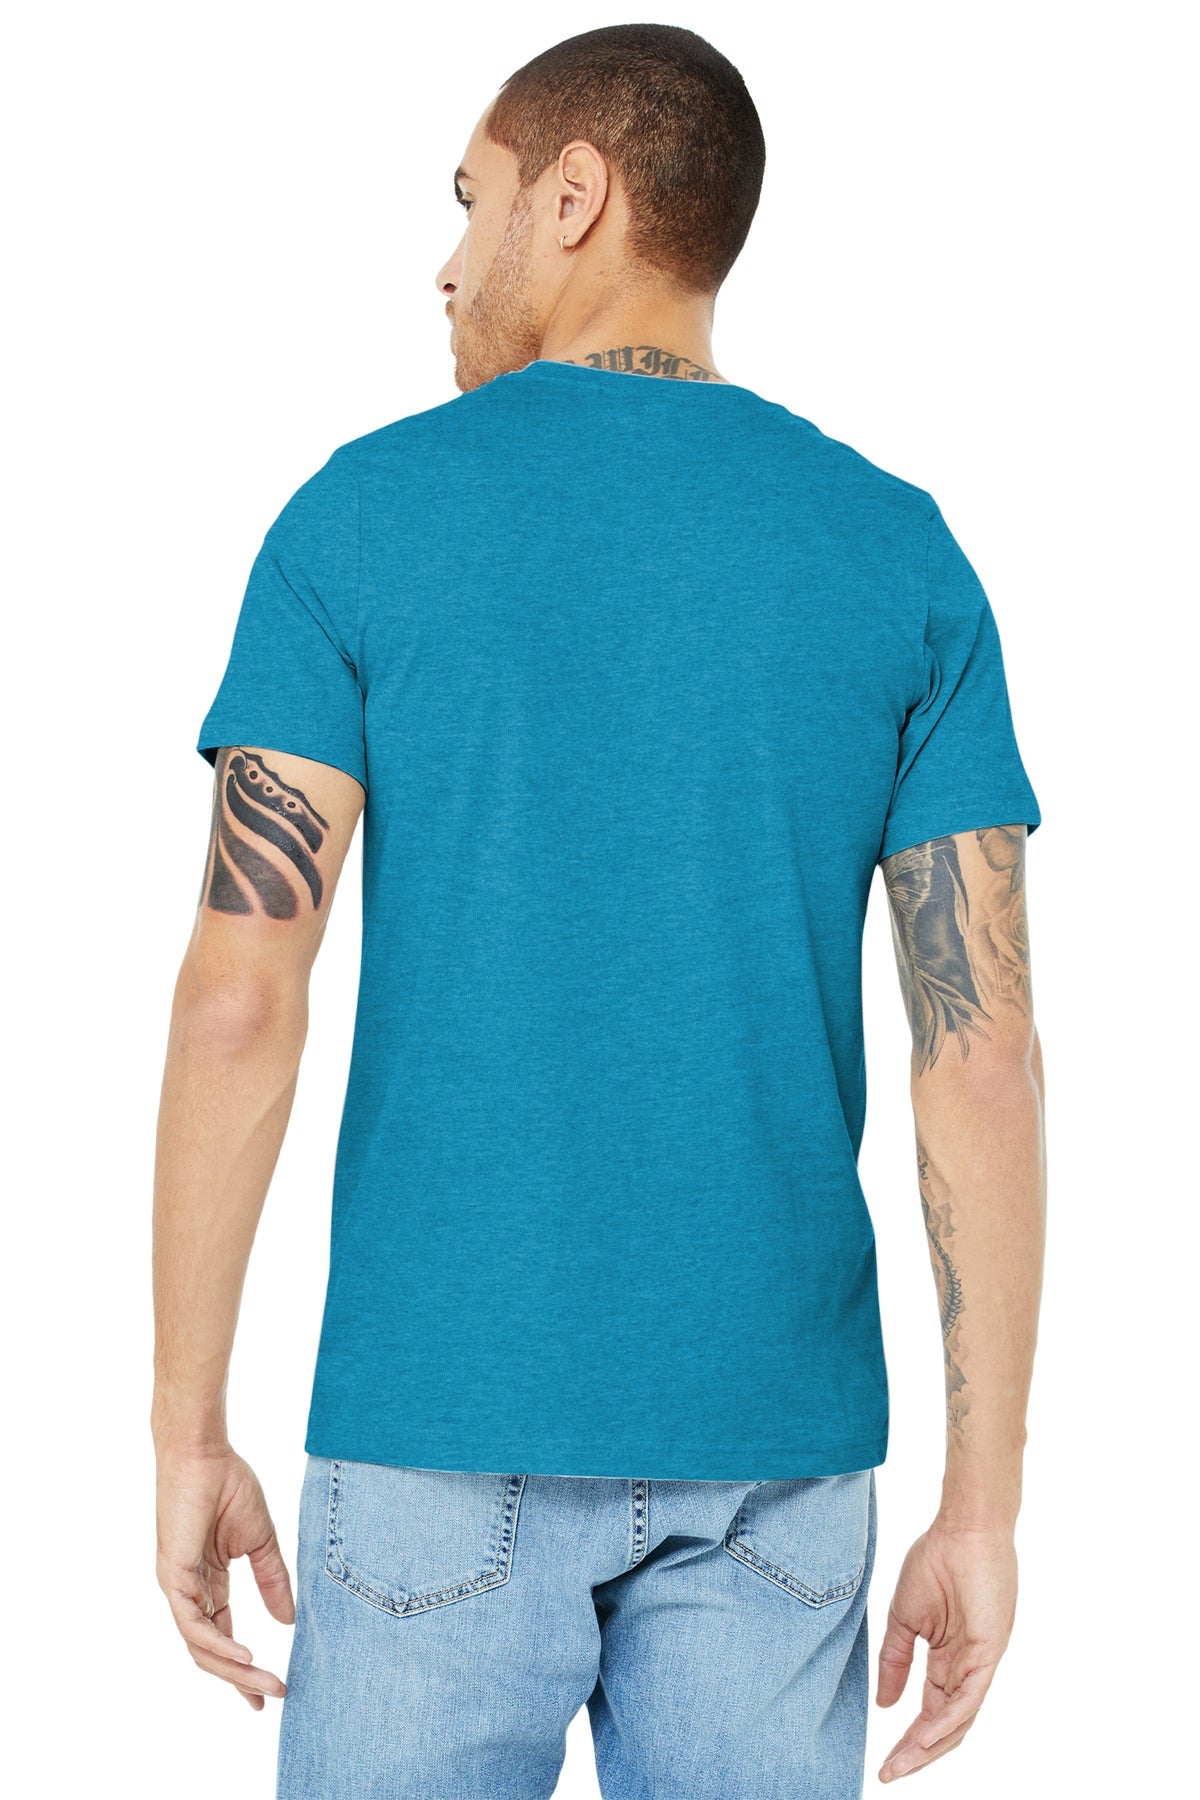 bella + canvas unisex jersey short sleeve t-shirt 3001c heather aqua